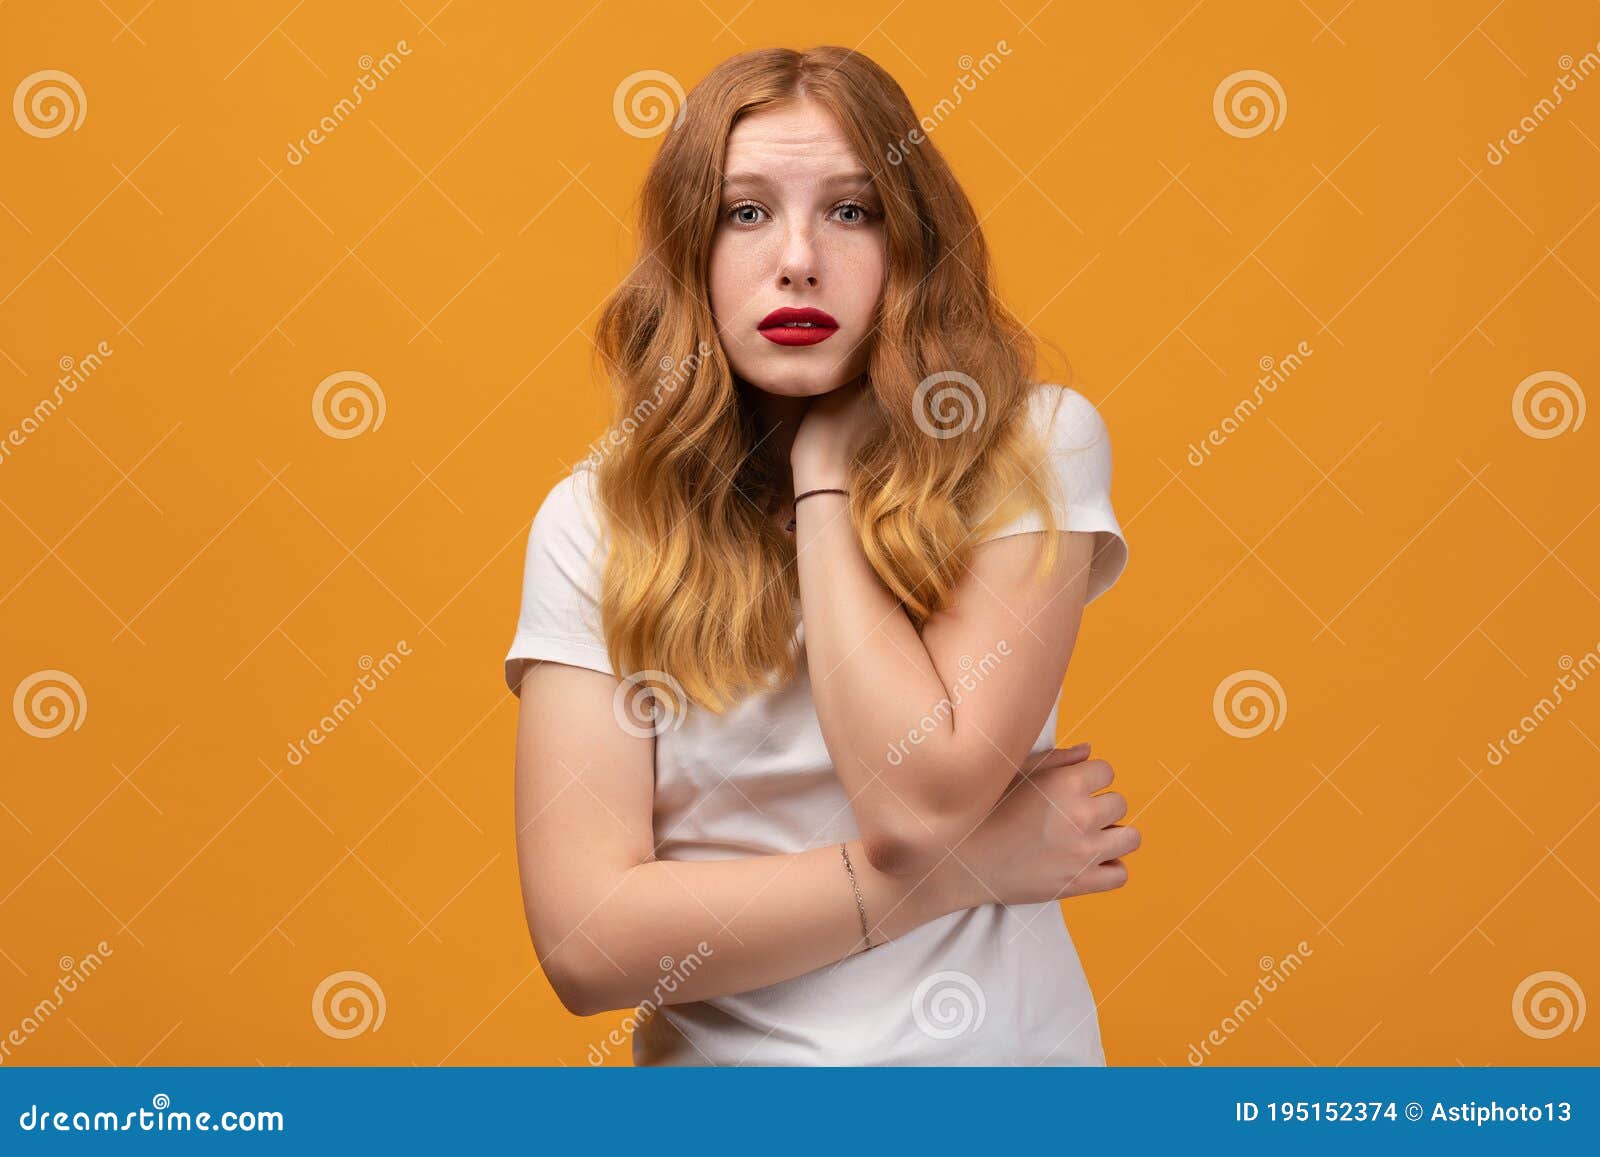 curvy redhead women selfie sex gallerie